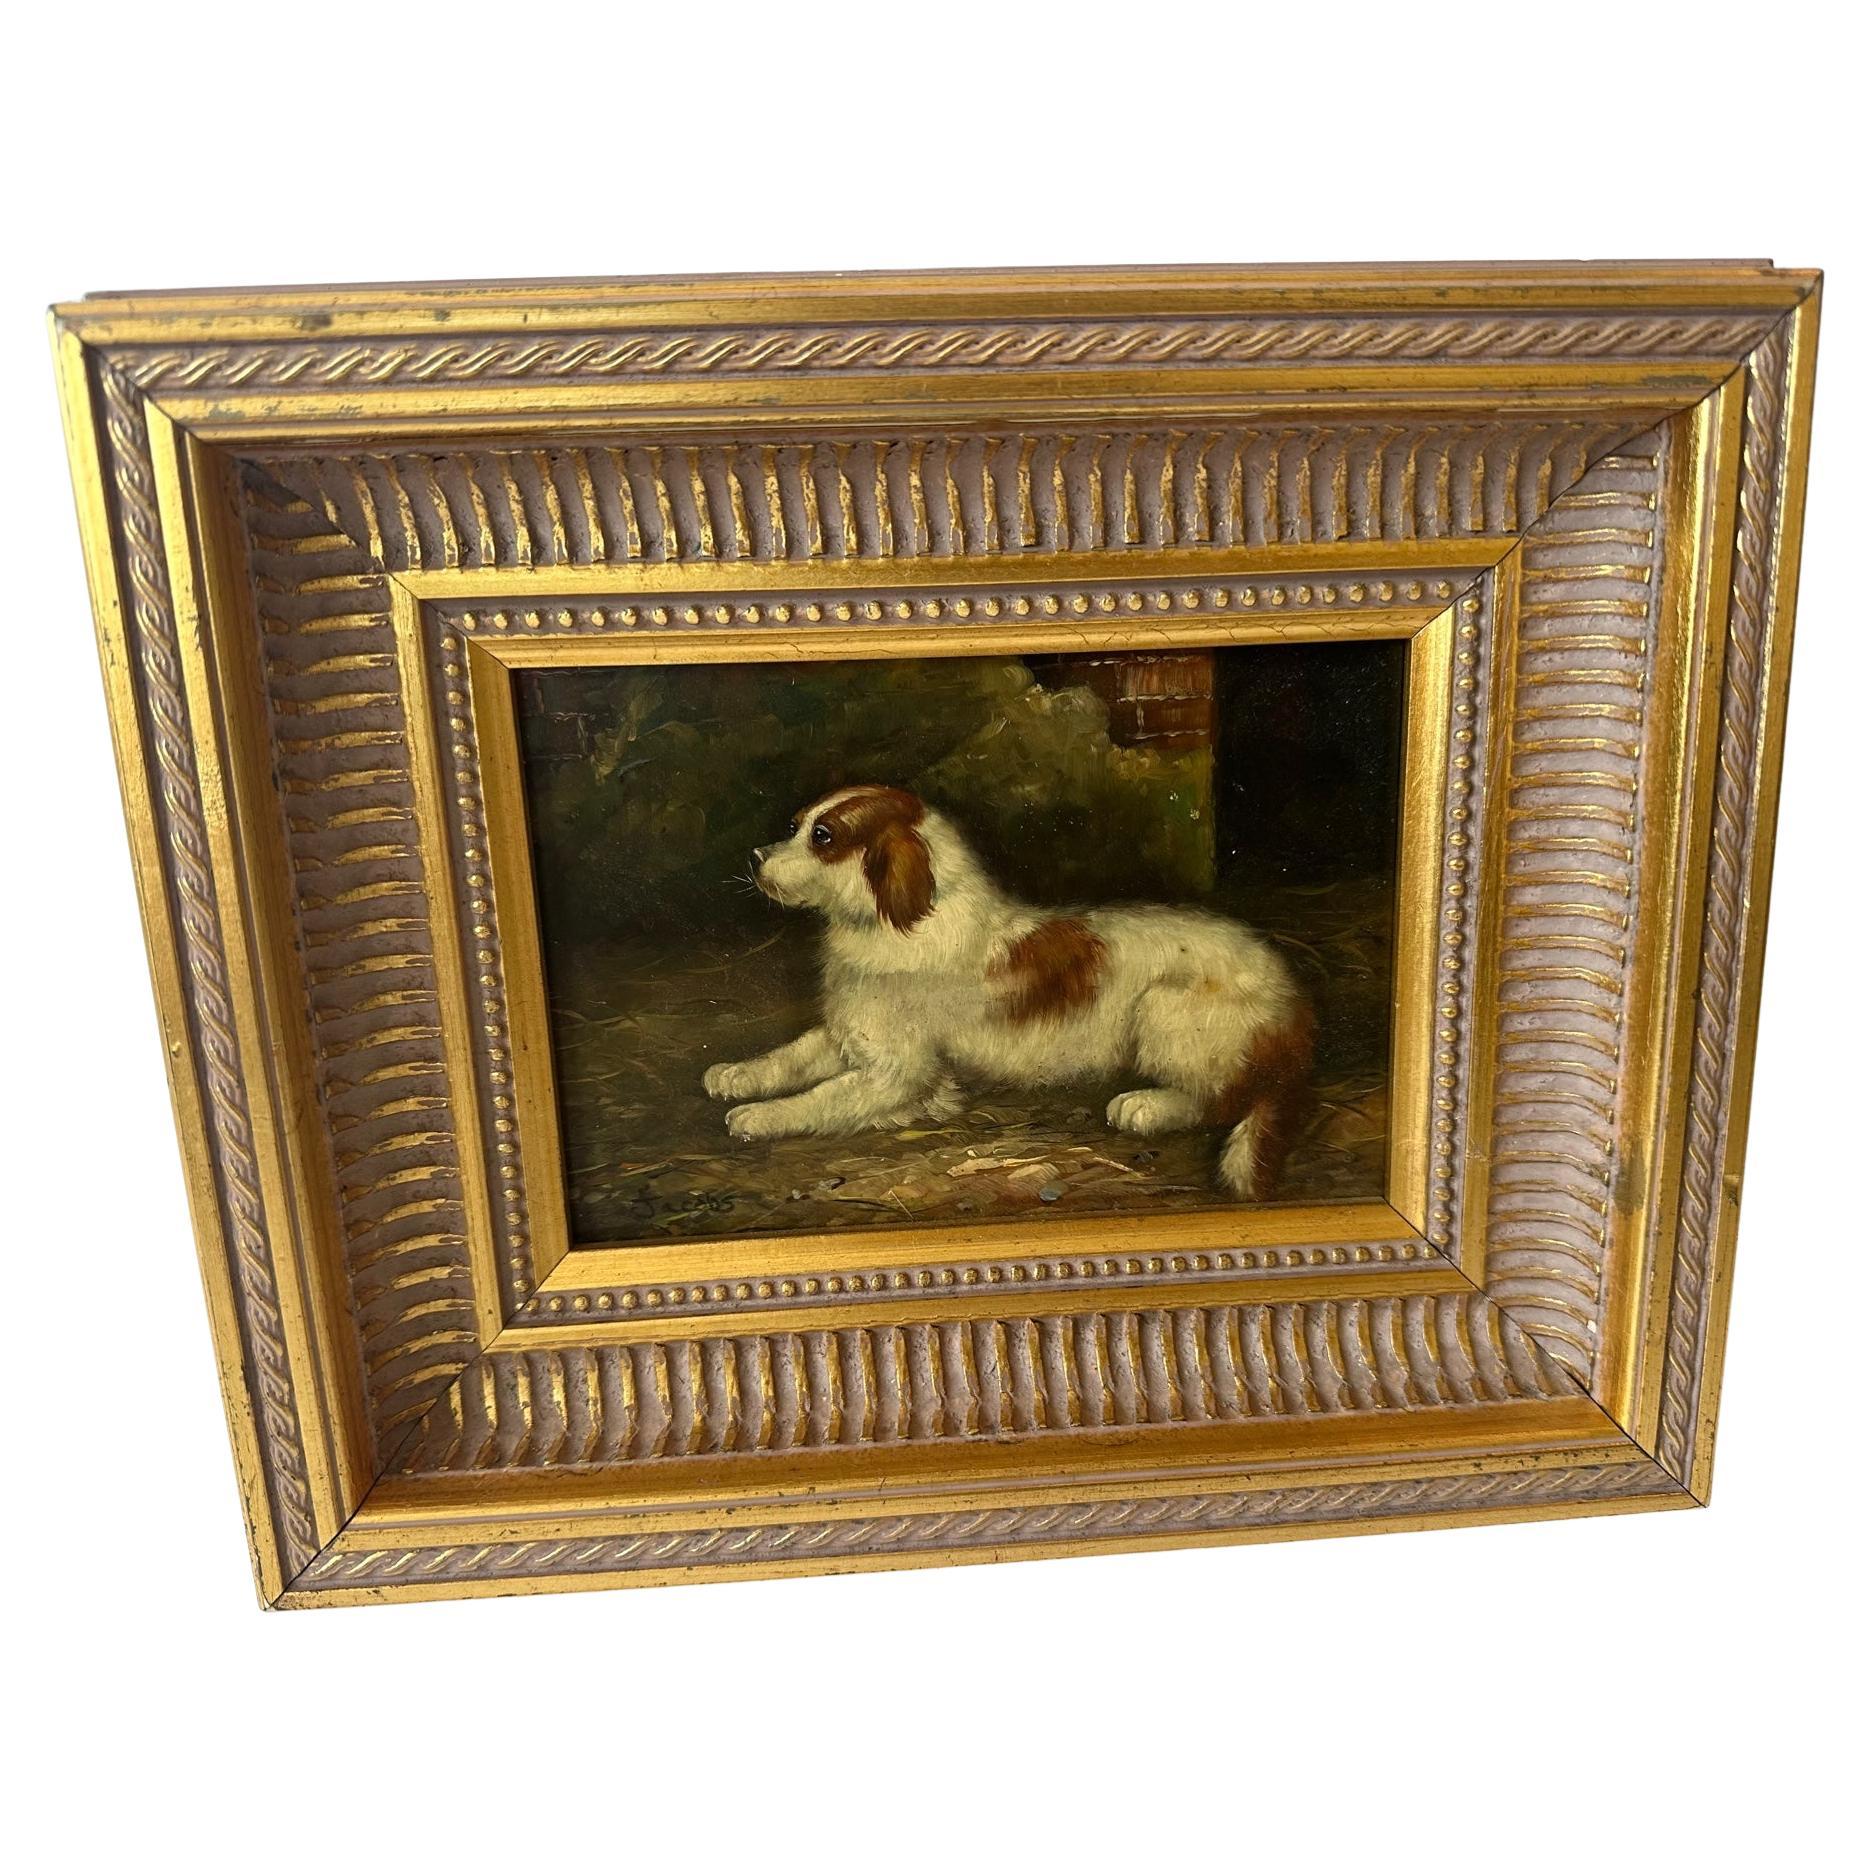 Original Small Oil of Spaniel Dog in Ornate Gold Frame